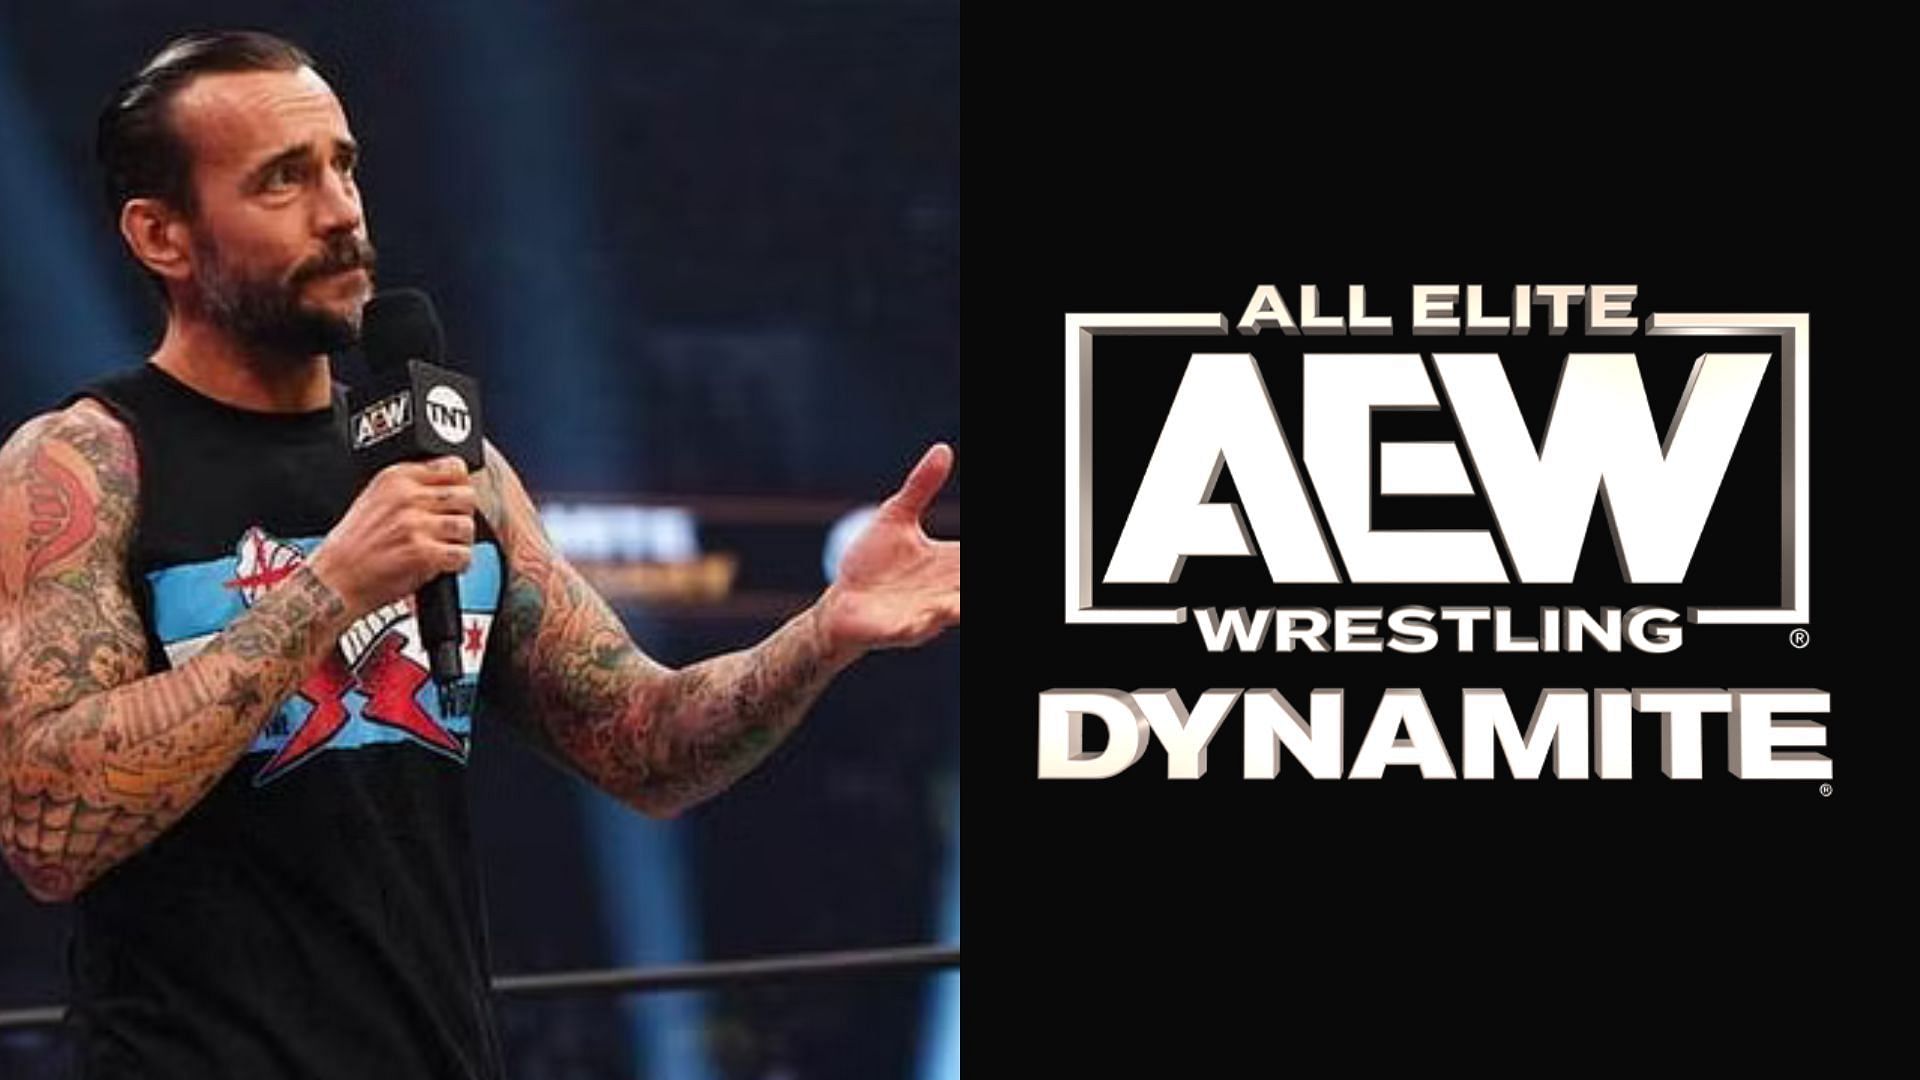 CM Punk is the former AEW World Champion